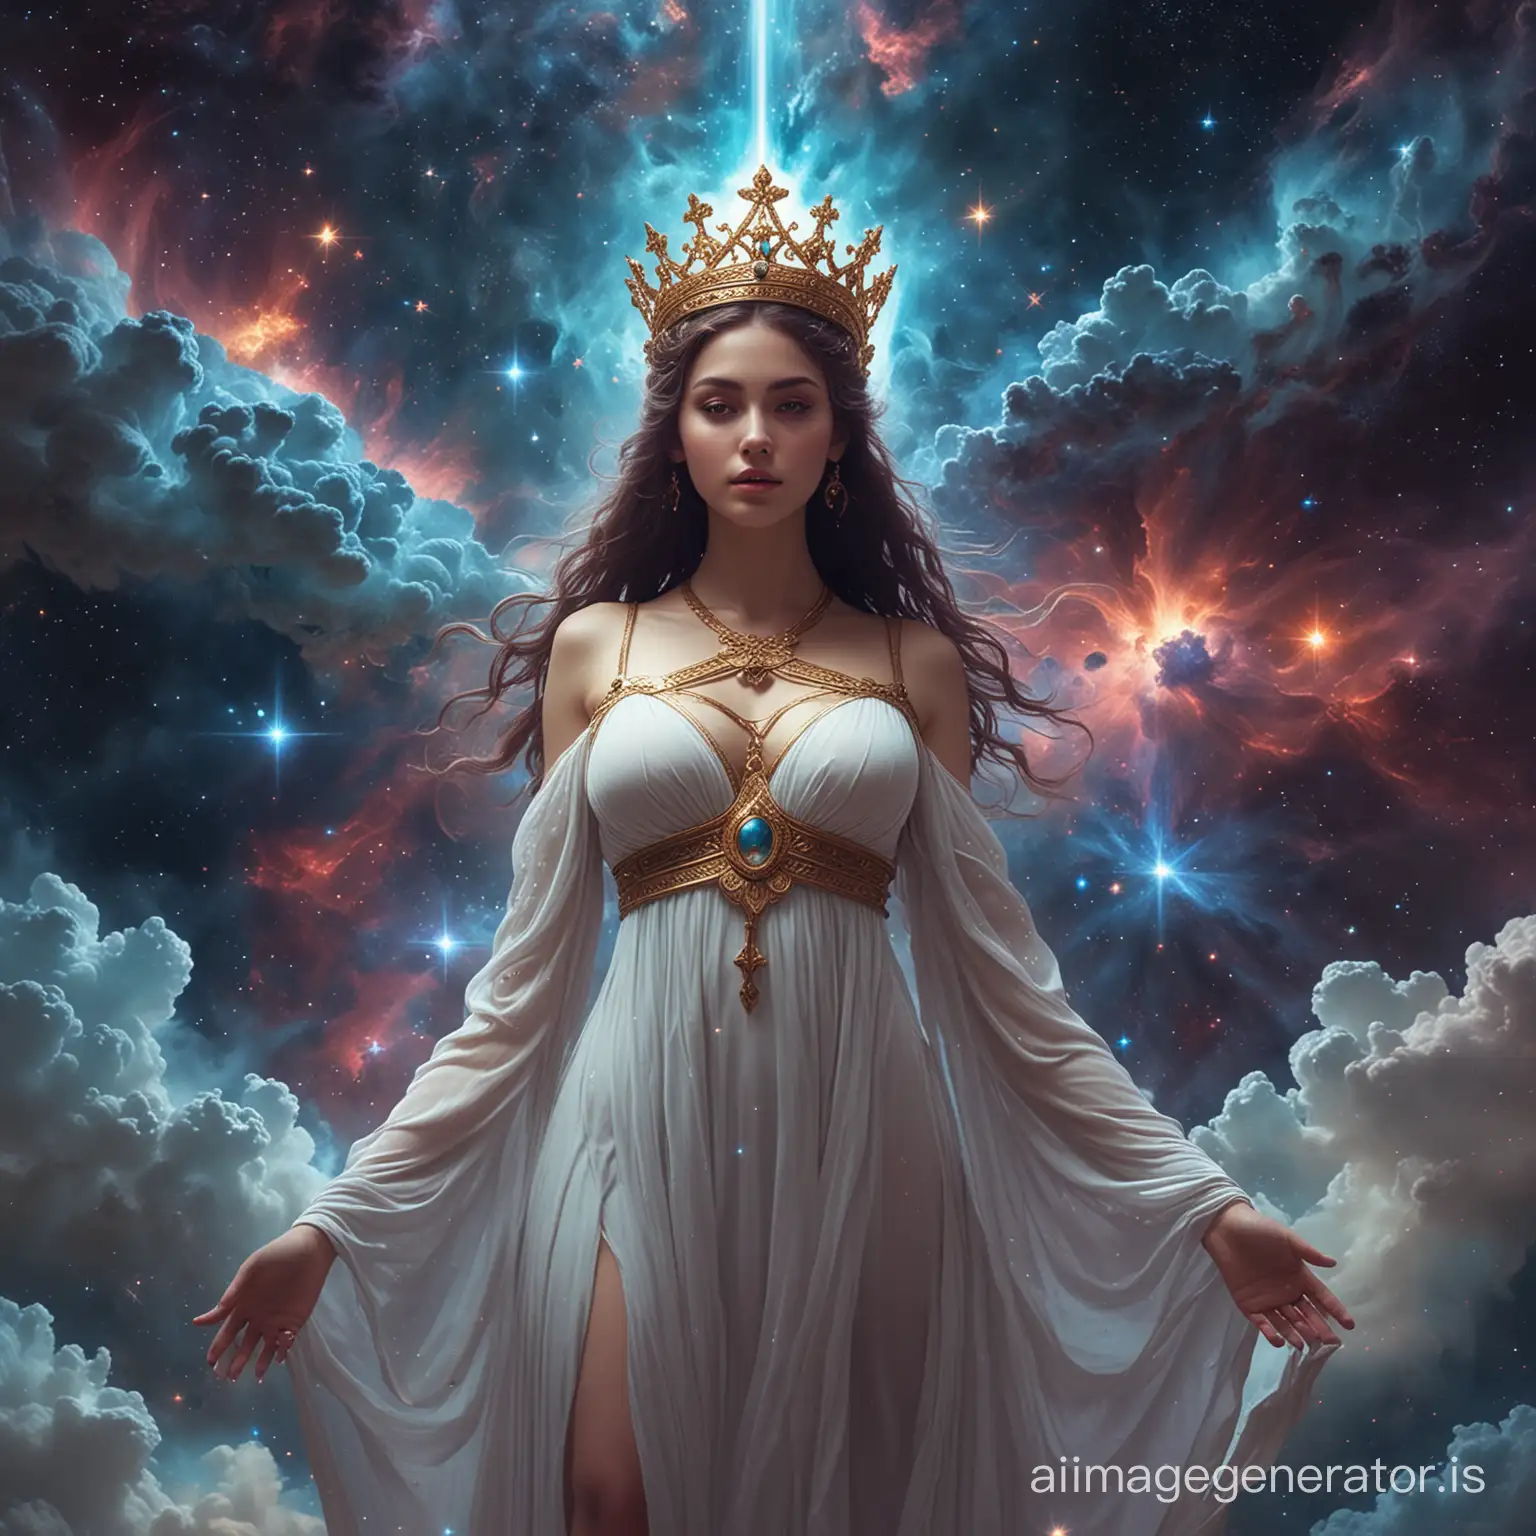 Divine-Adolescent-Goddess-amidst-Celestial-Nebulae